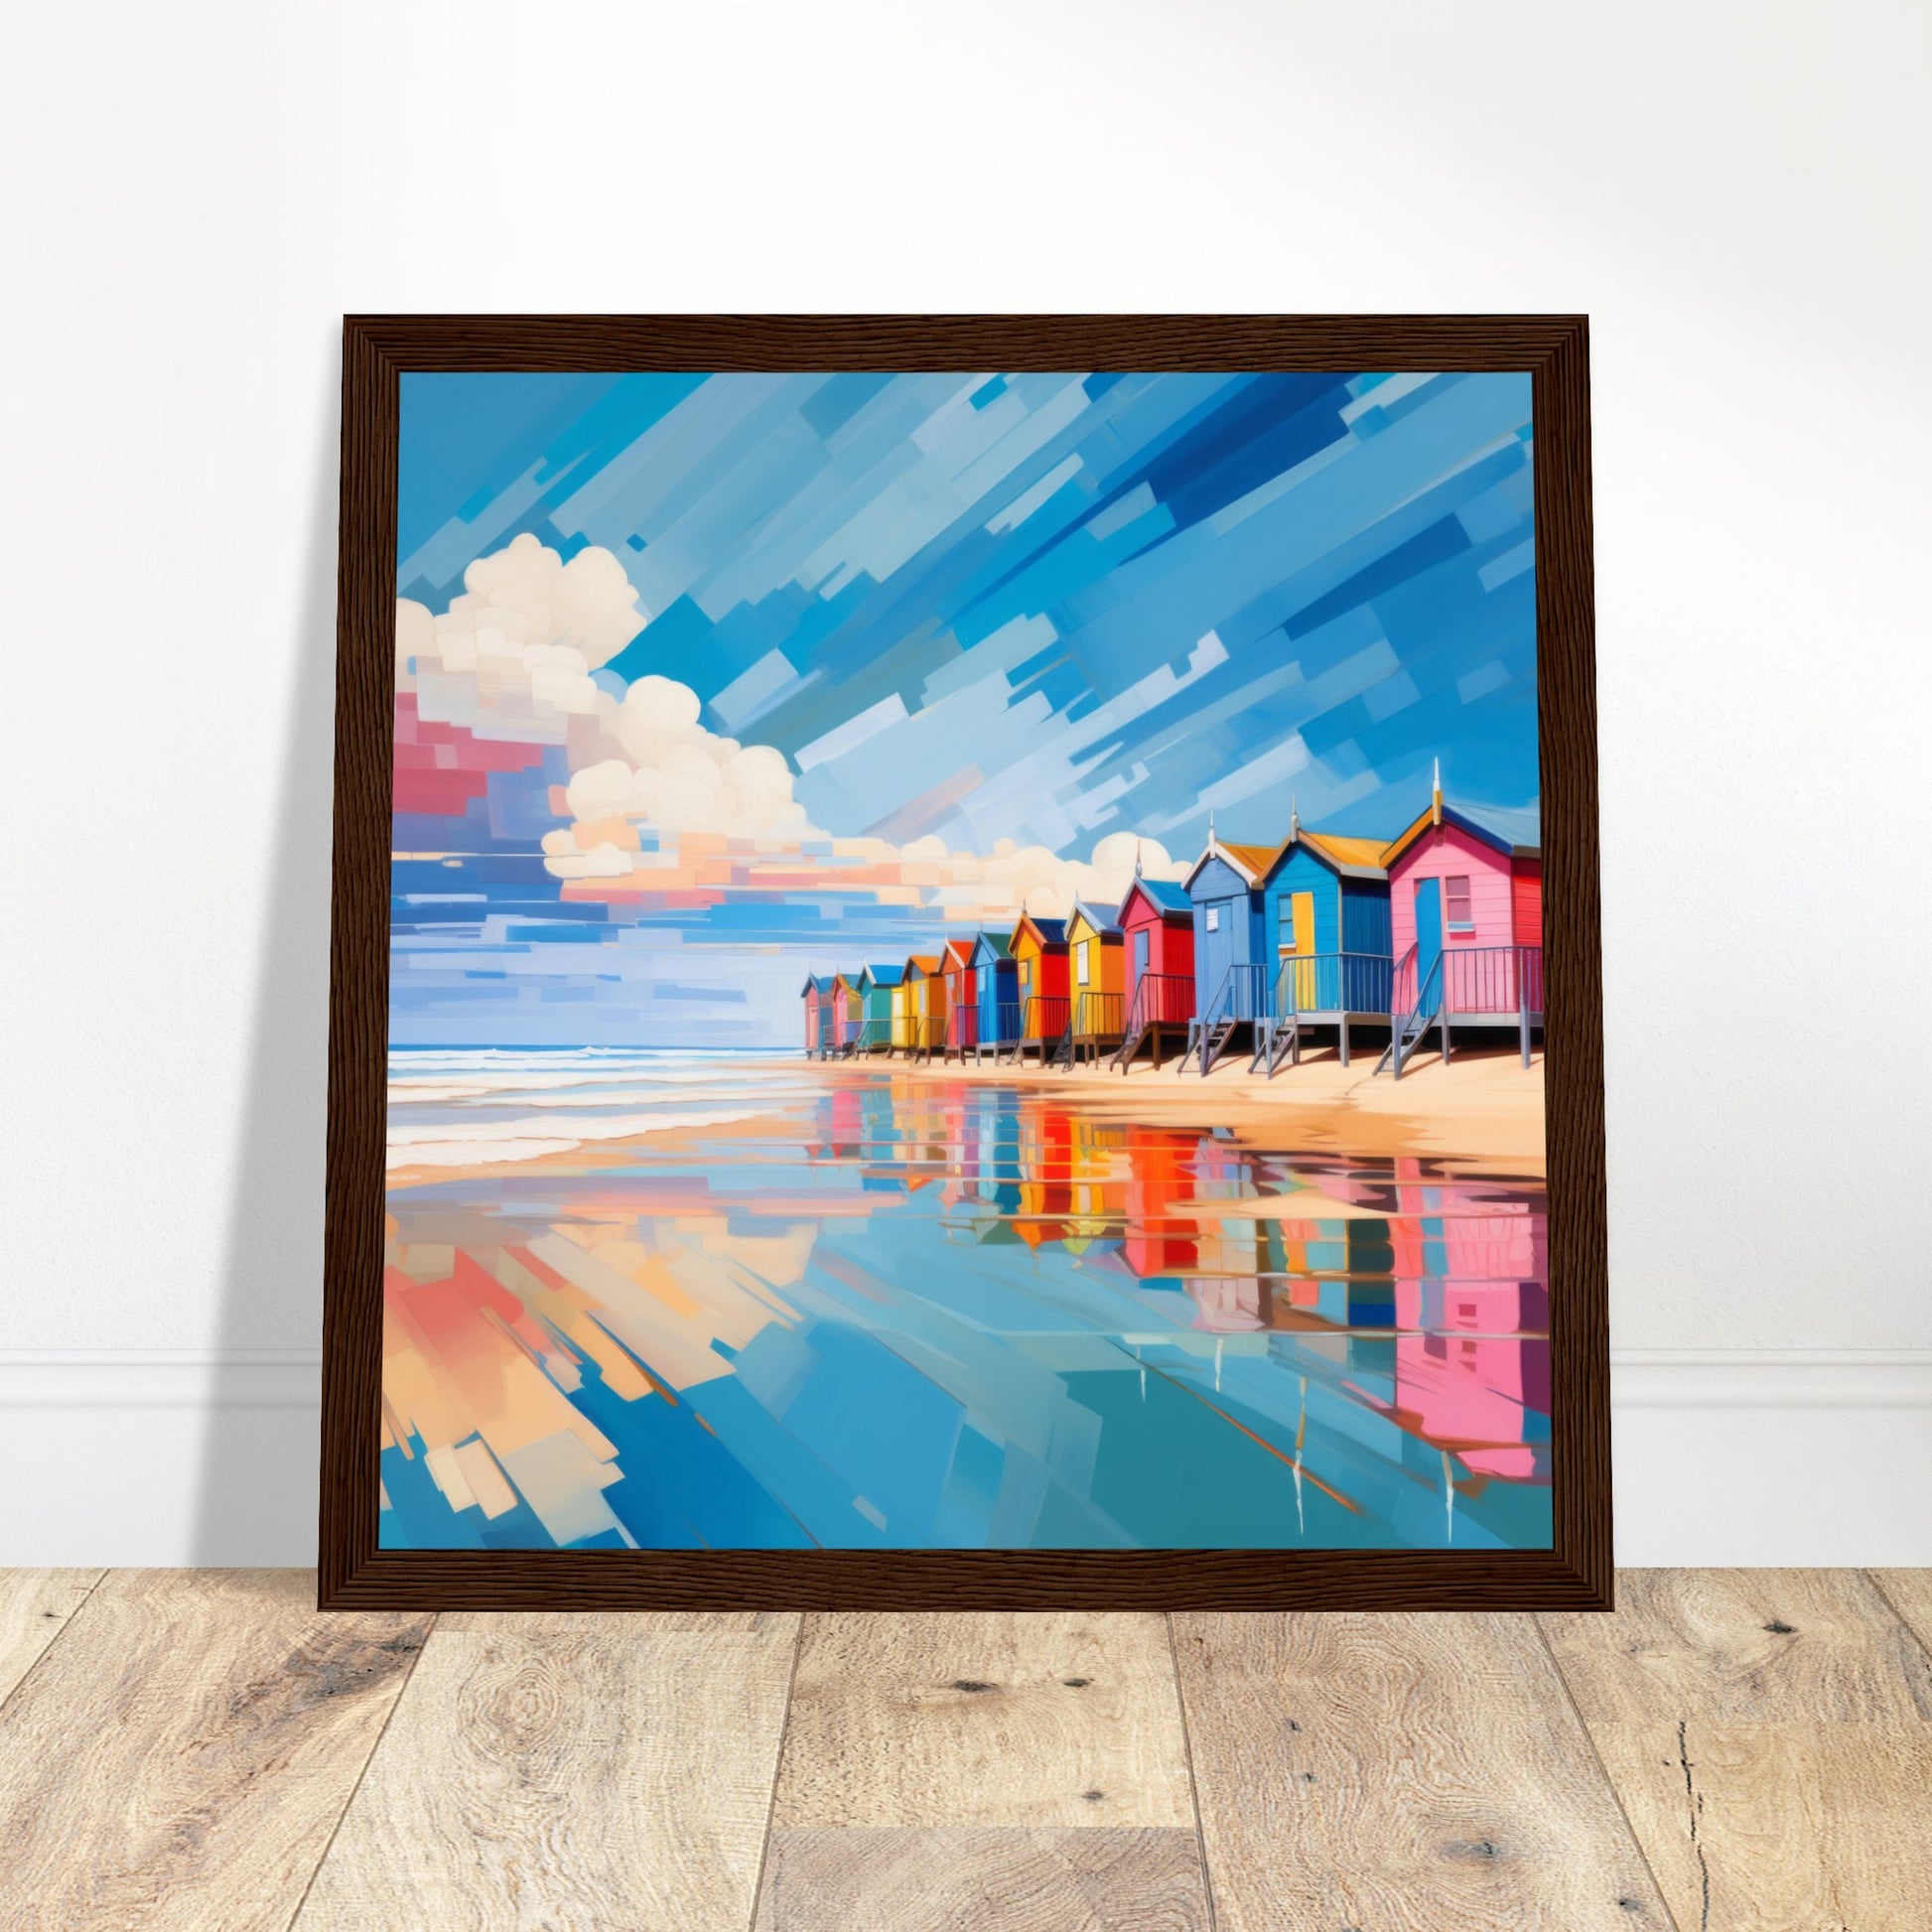 Vibrant Beach Huts Beach Art - Print Room Ltd White frame 50x50 cm / 20x20"